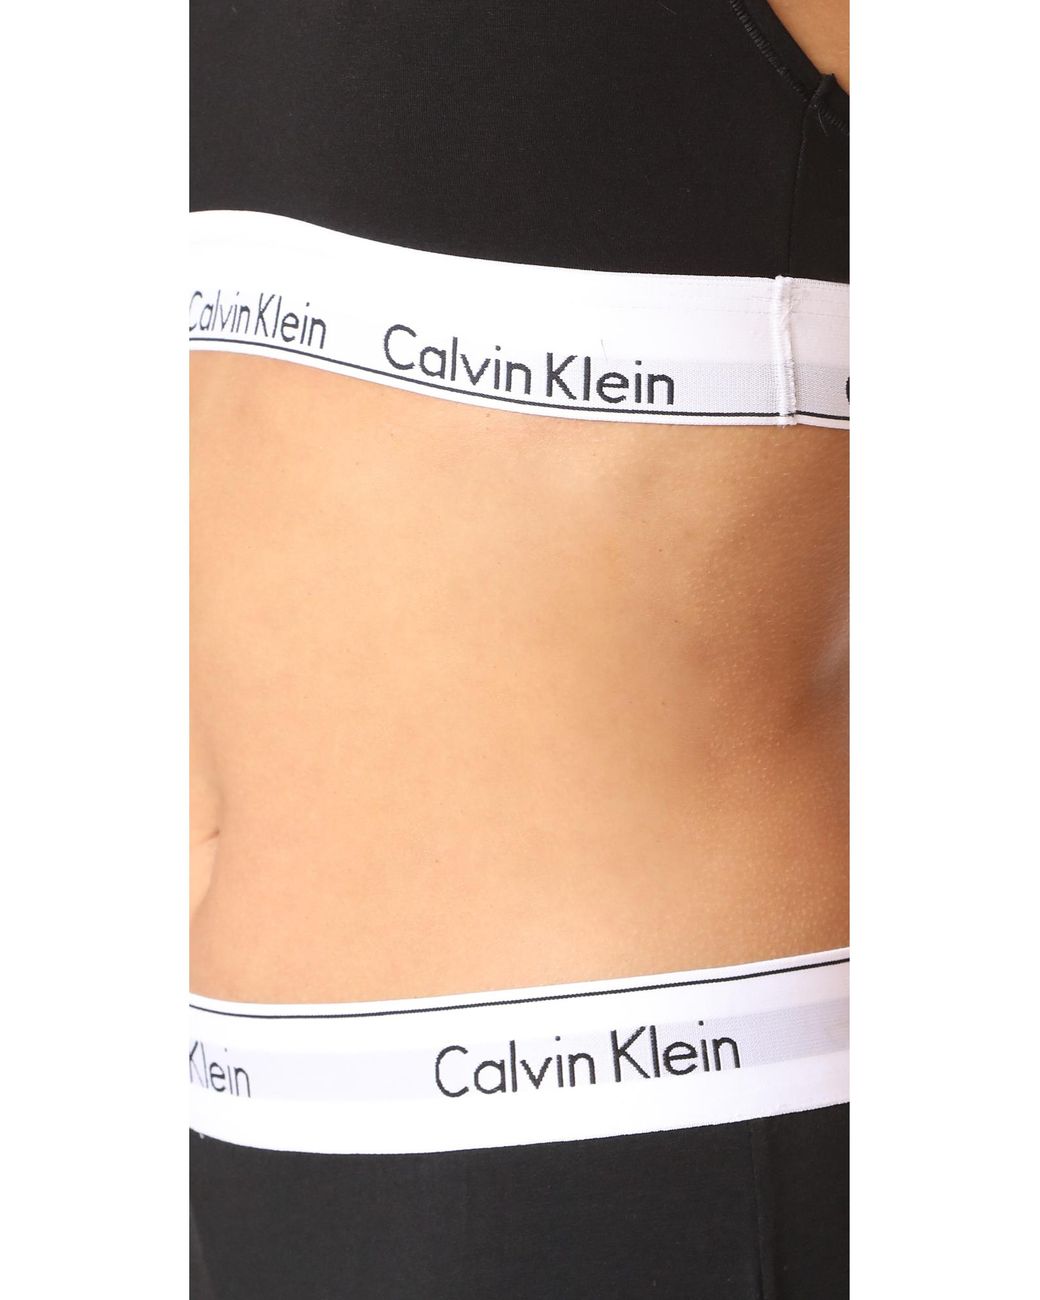 Calvin klein leggings - clothing & accessories - by owner - apparel sale -  craigslist